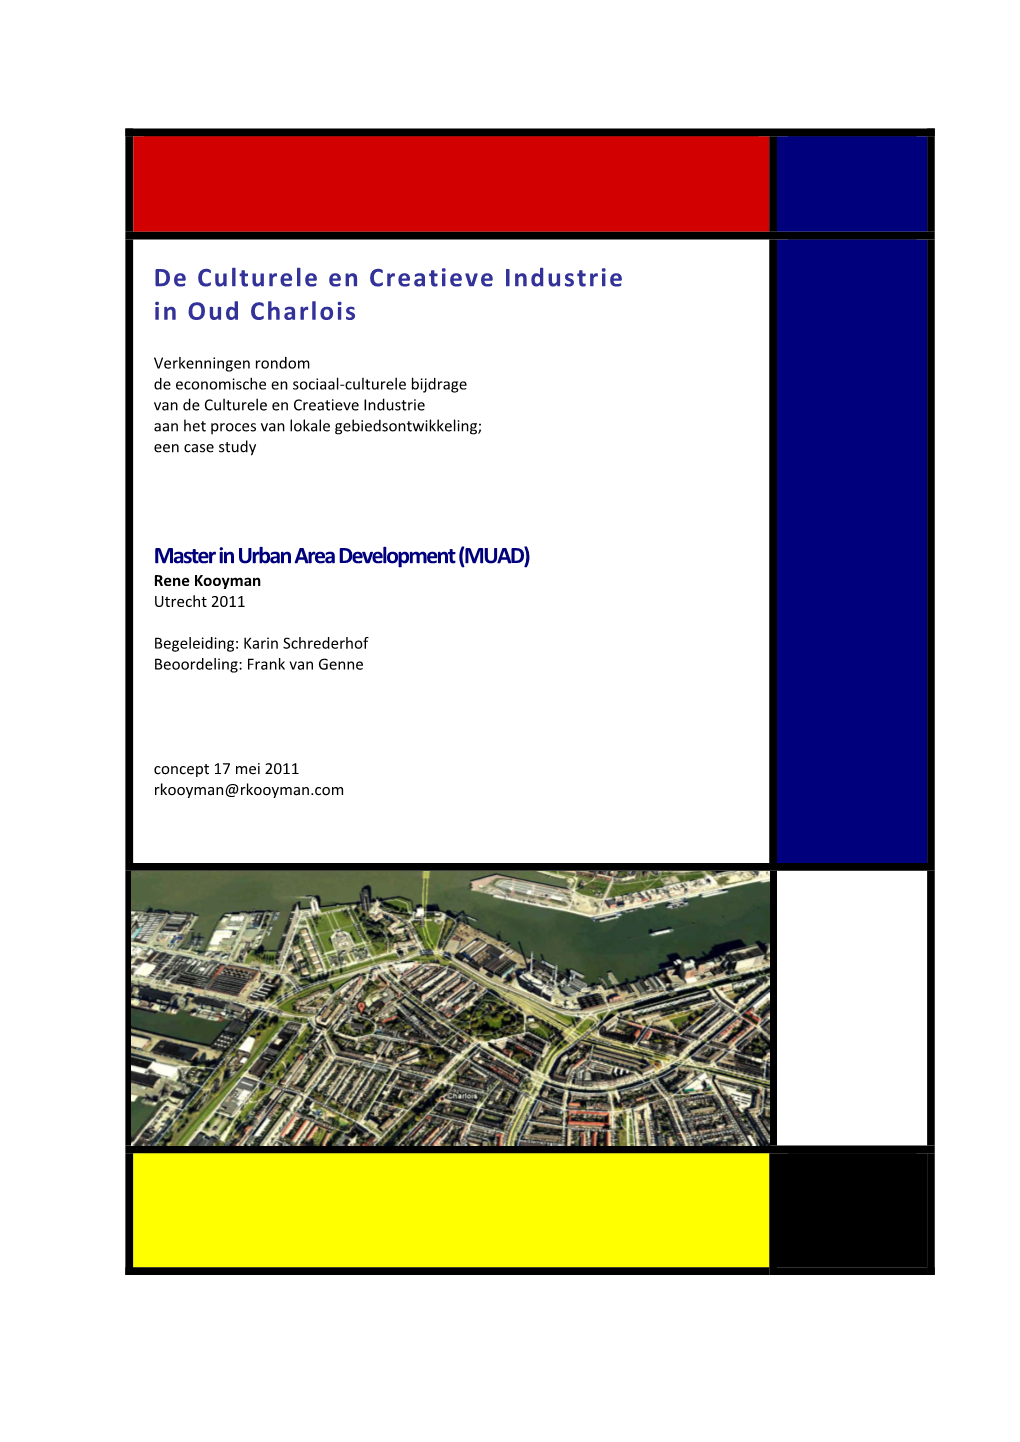 De Culturele En Creatieve Industrie in Oud Charlois